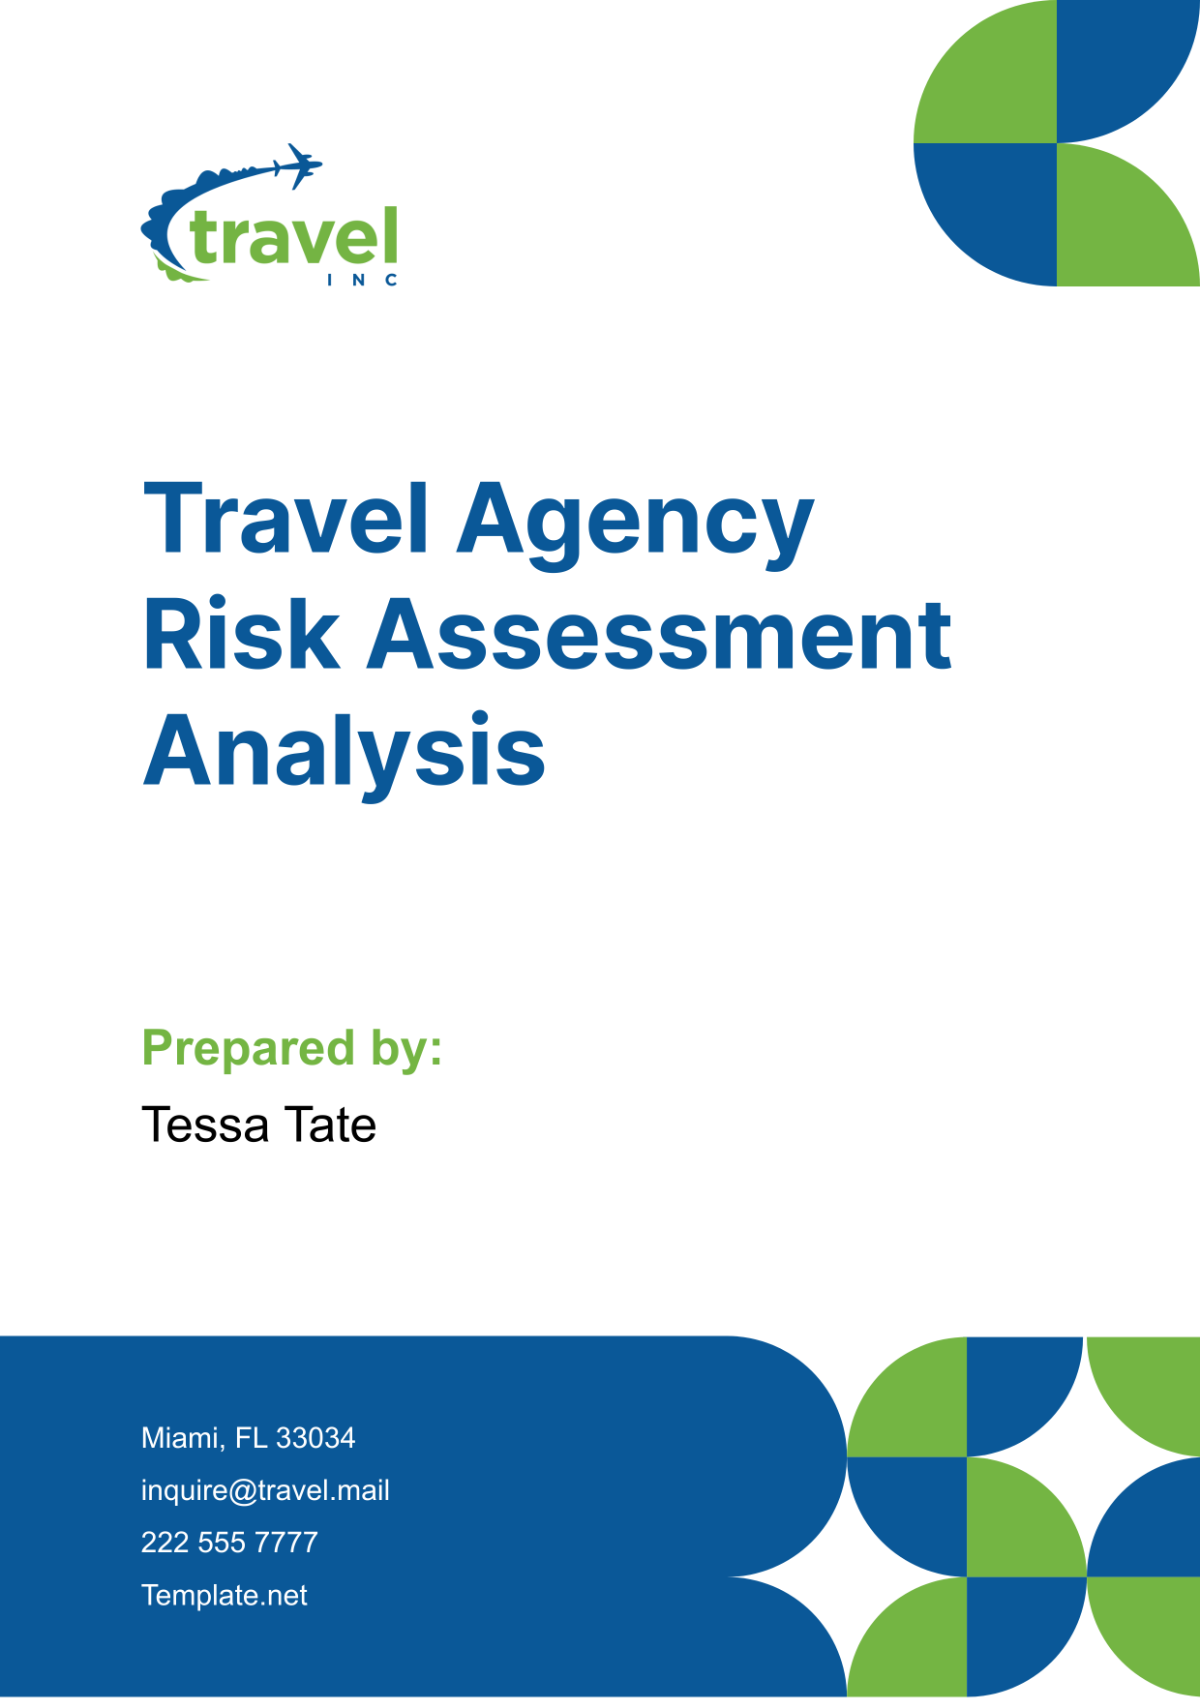 Travel Agency Risk Assessment Analysis Template